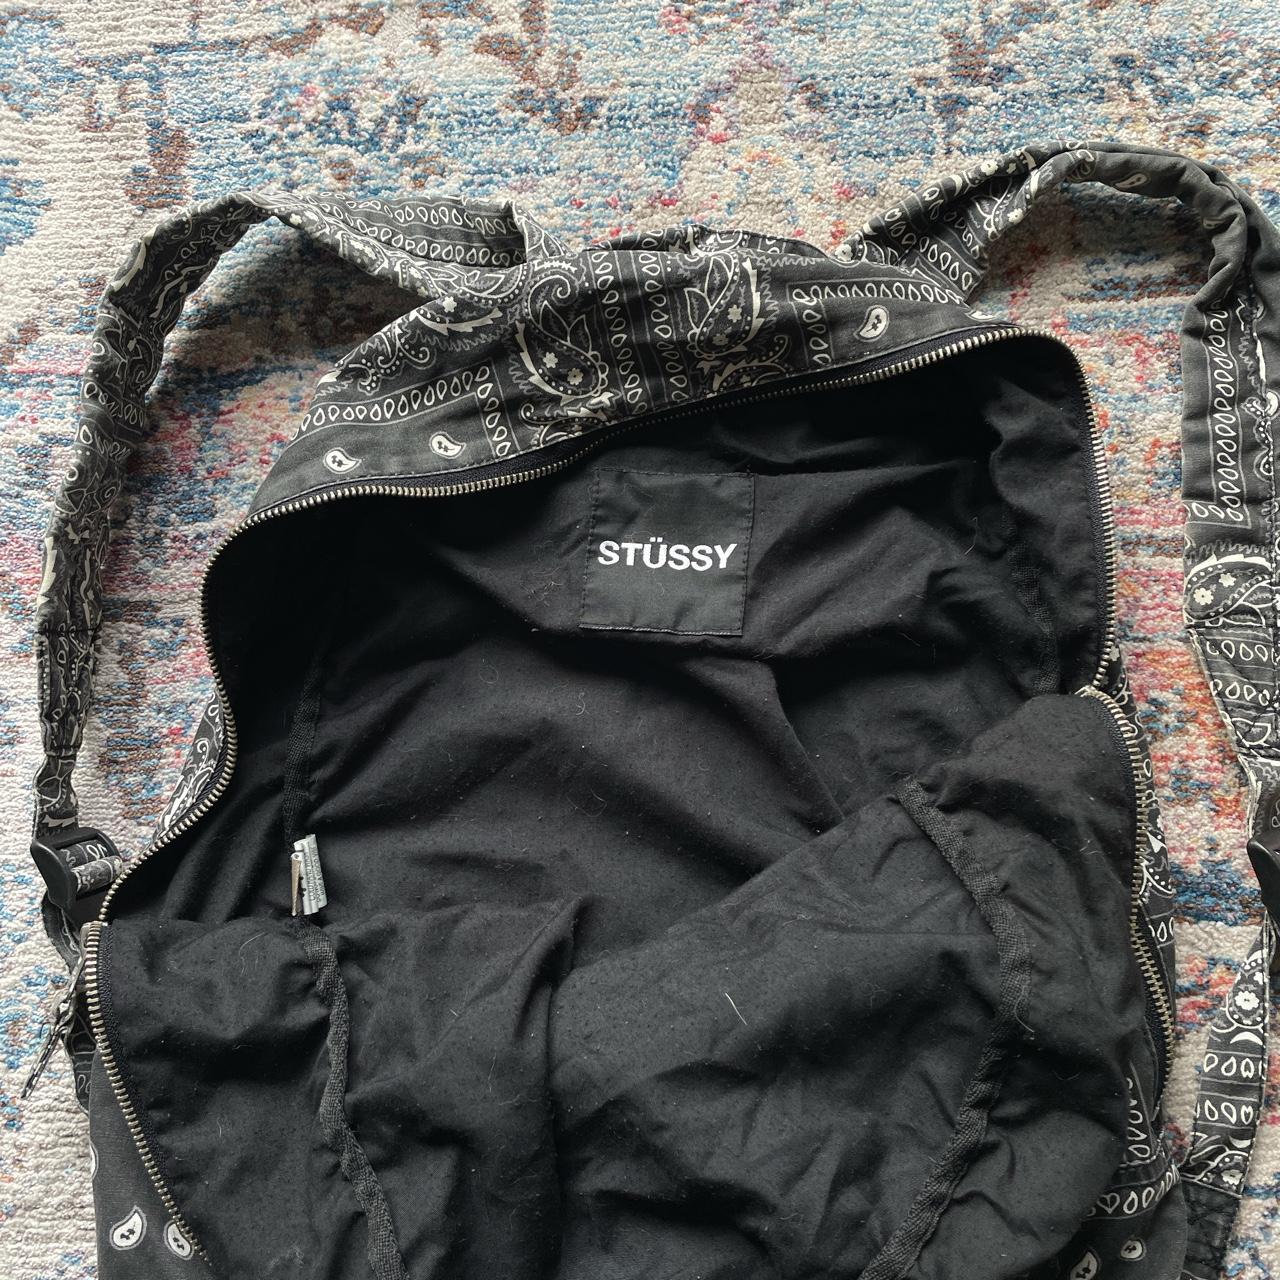 Vintage Stussy Black and White Backpack